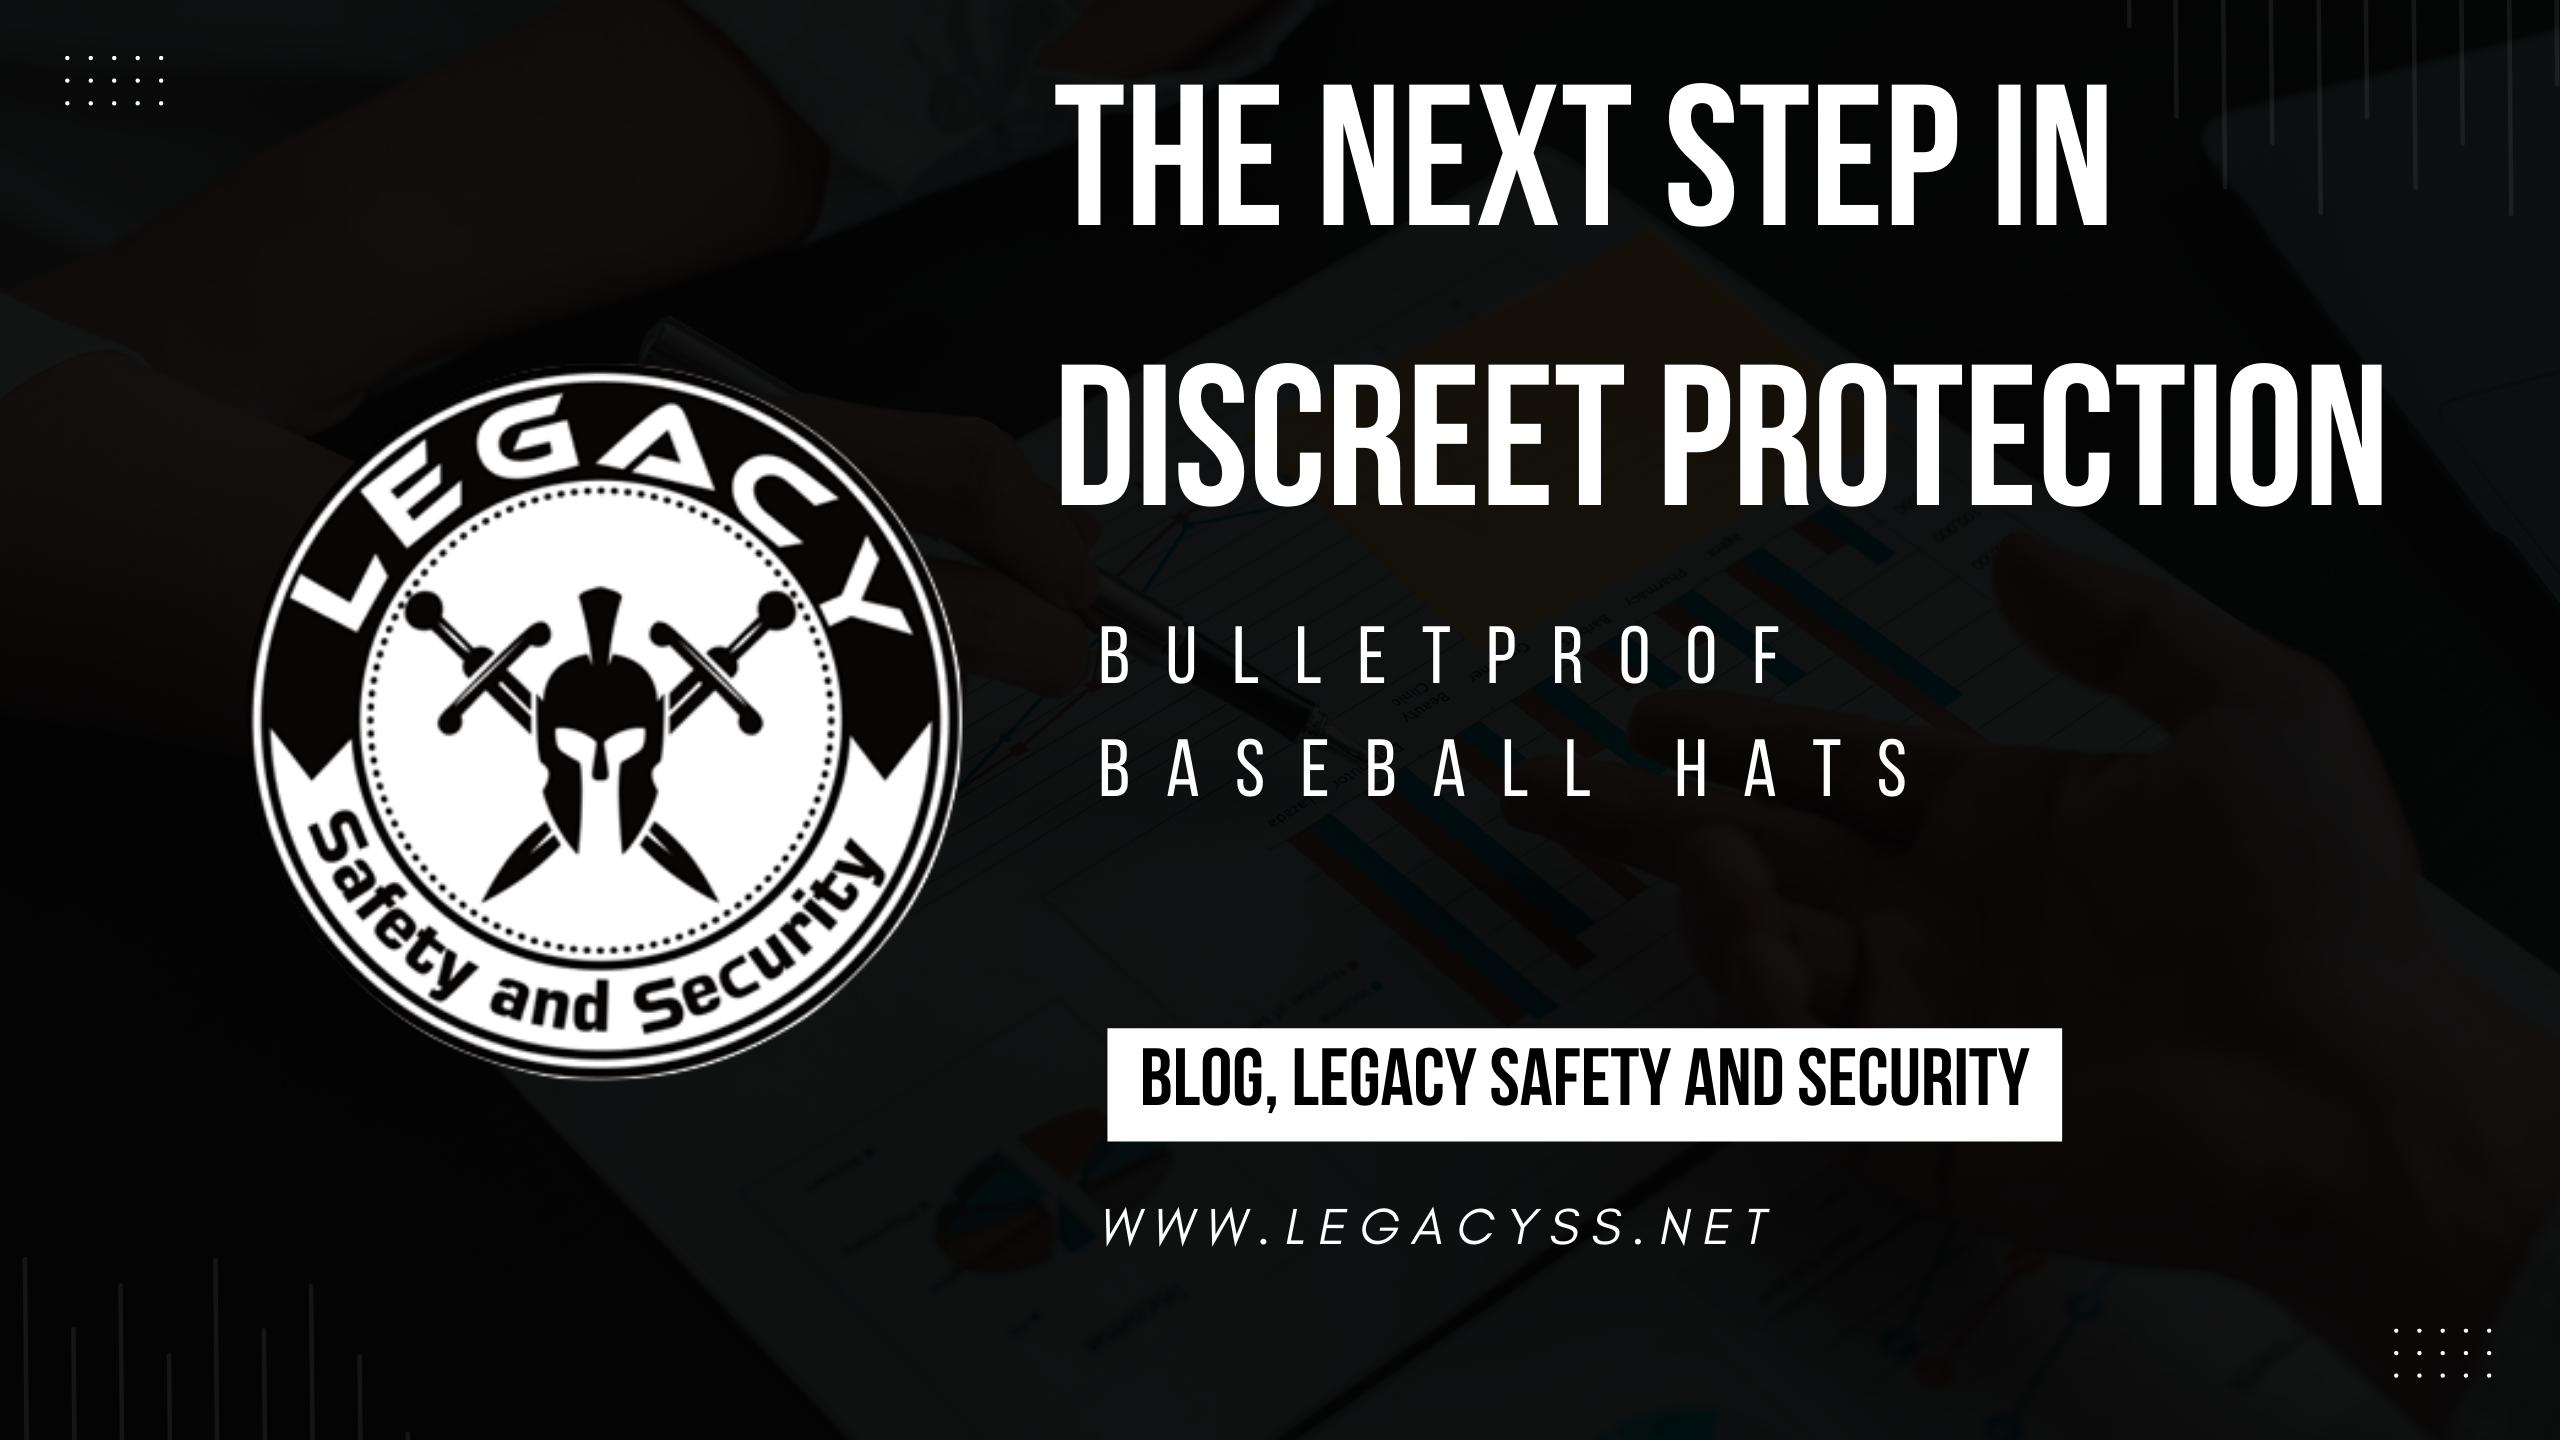 Tactical Shield Bulletproof Baseball Hats The Next Step in Discreet Protection